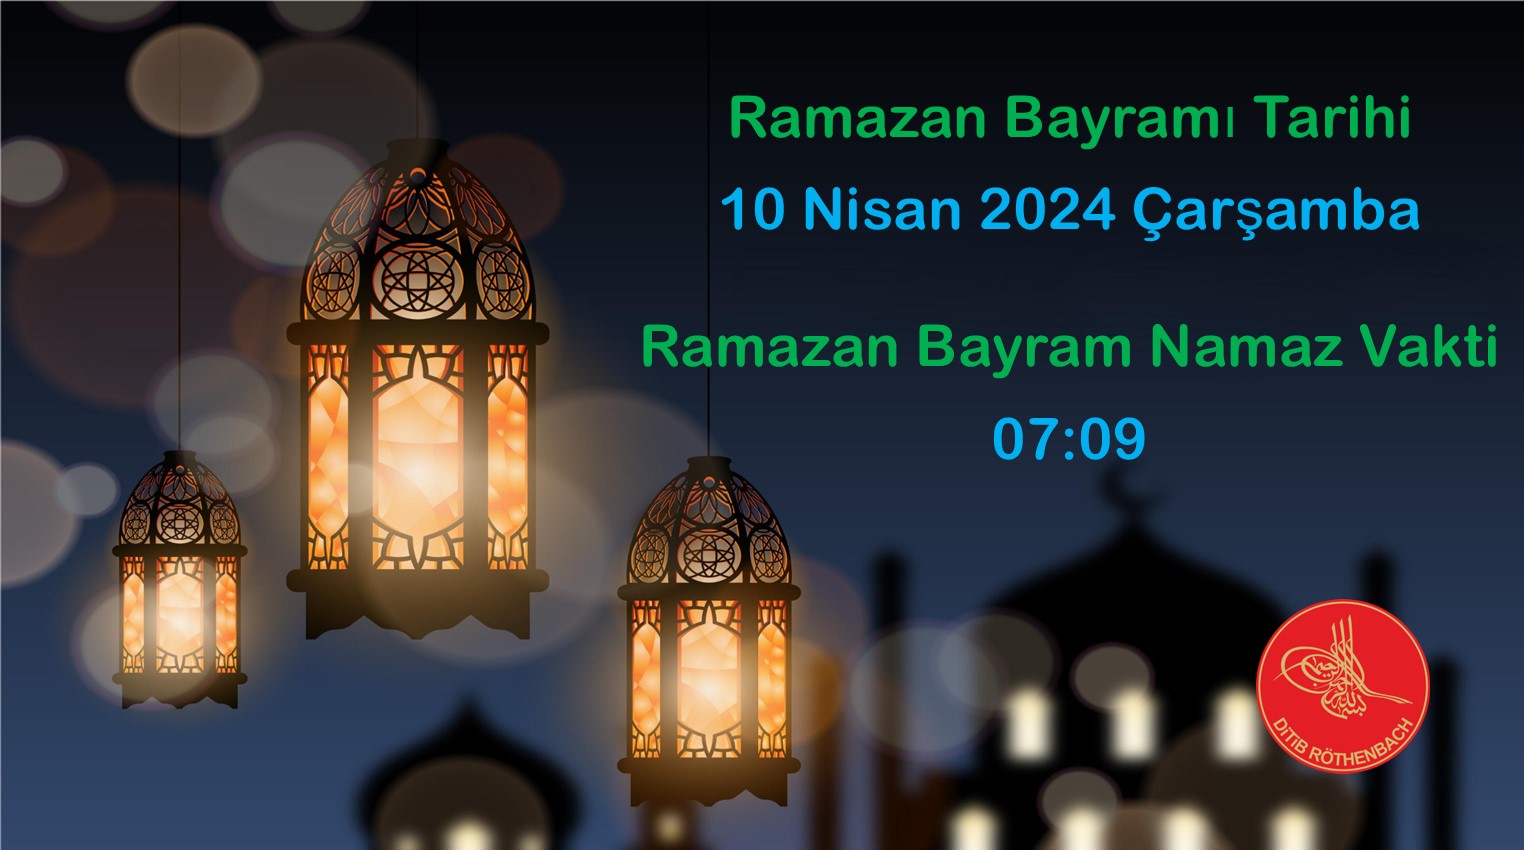 Ramazan bayram namazi 04 2024